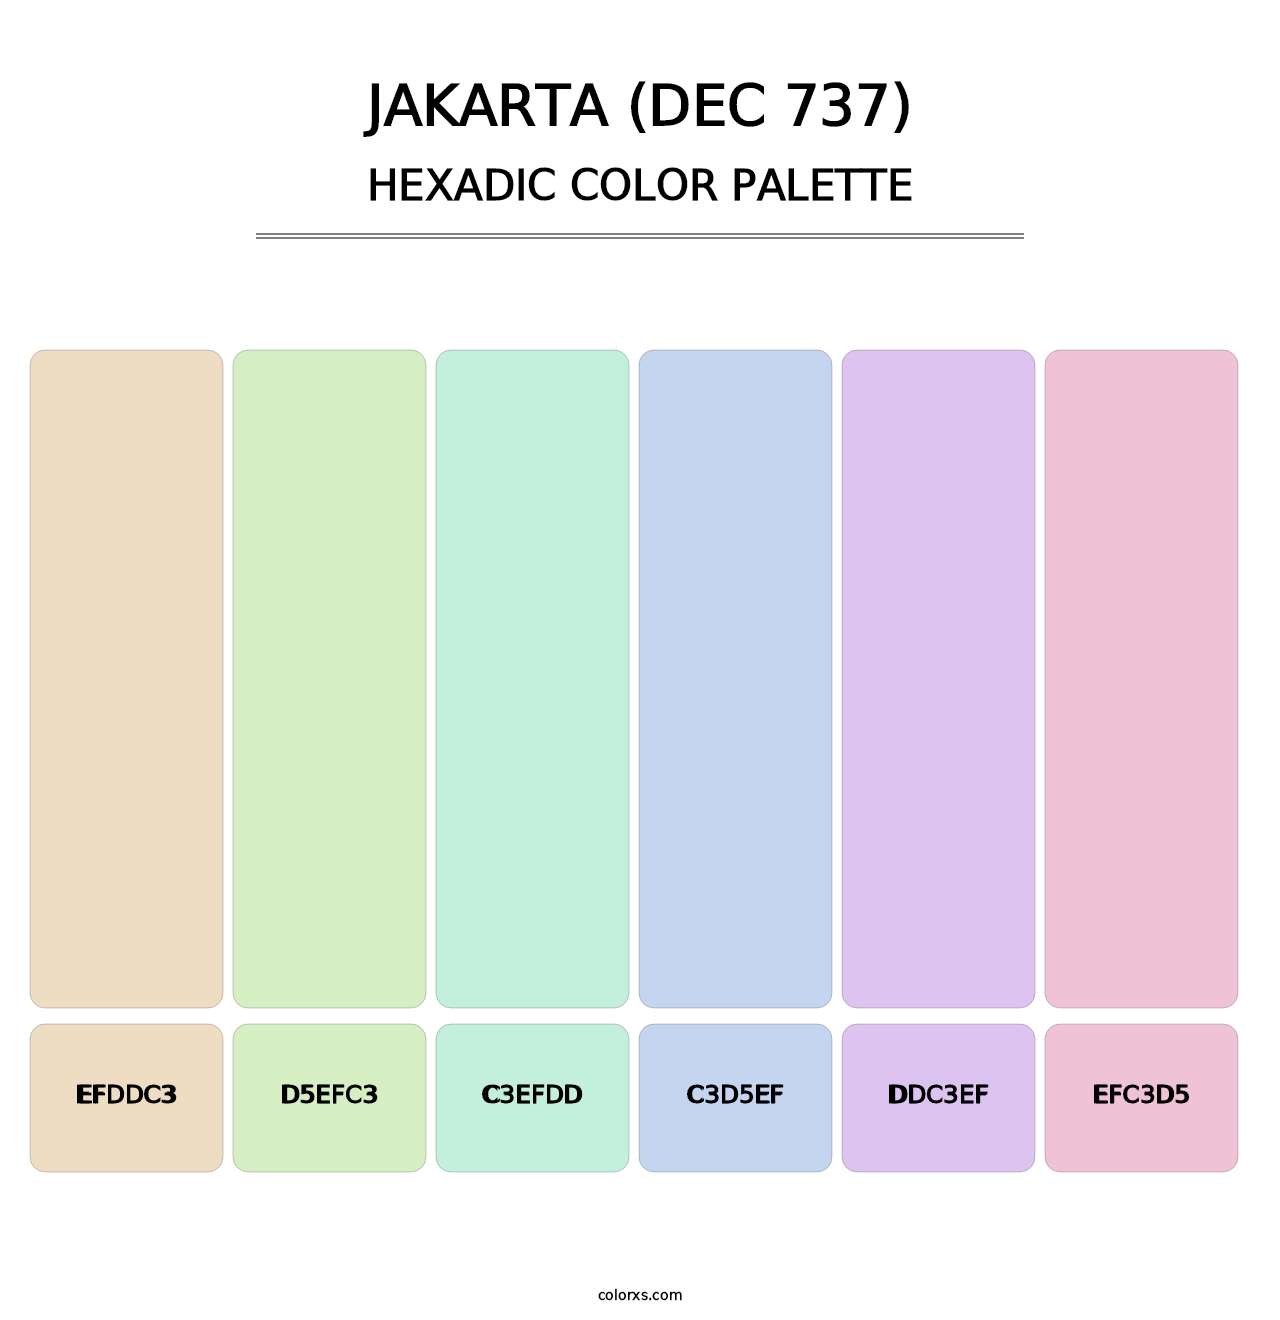 Jakarta (DEC 737) - Hexadic Color Palette